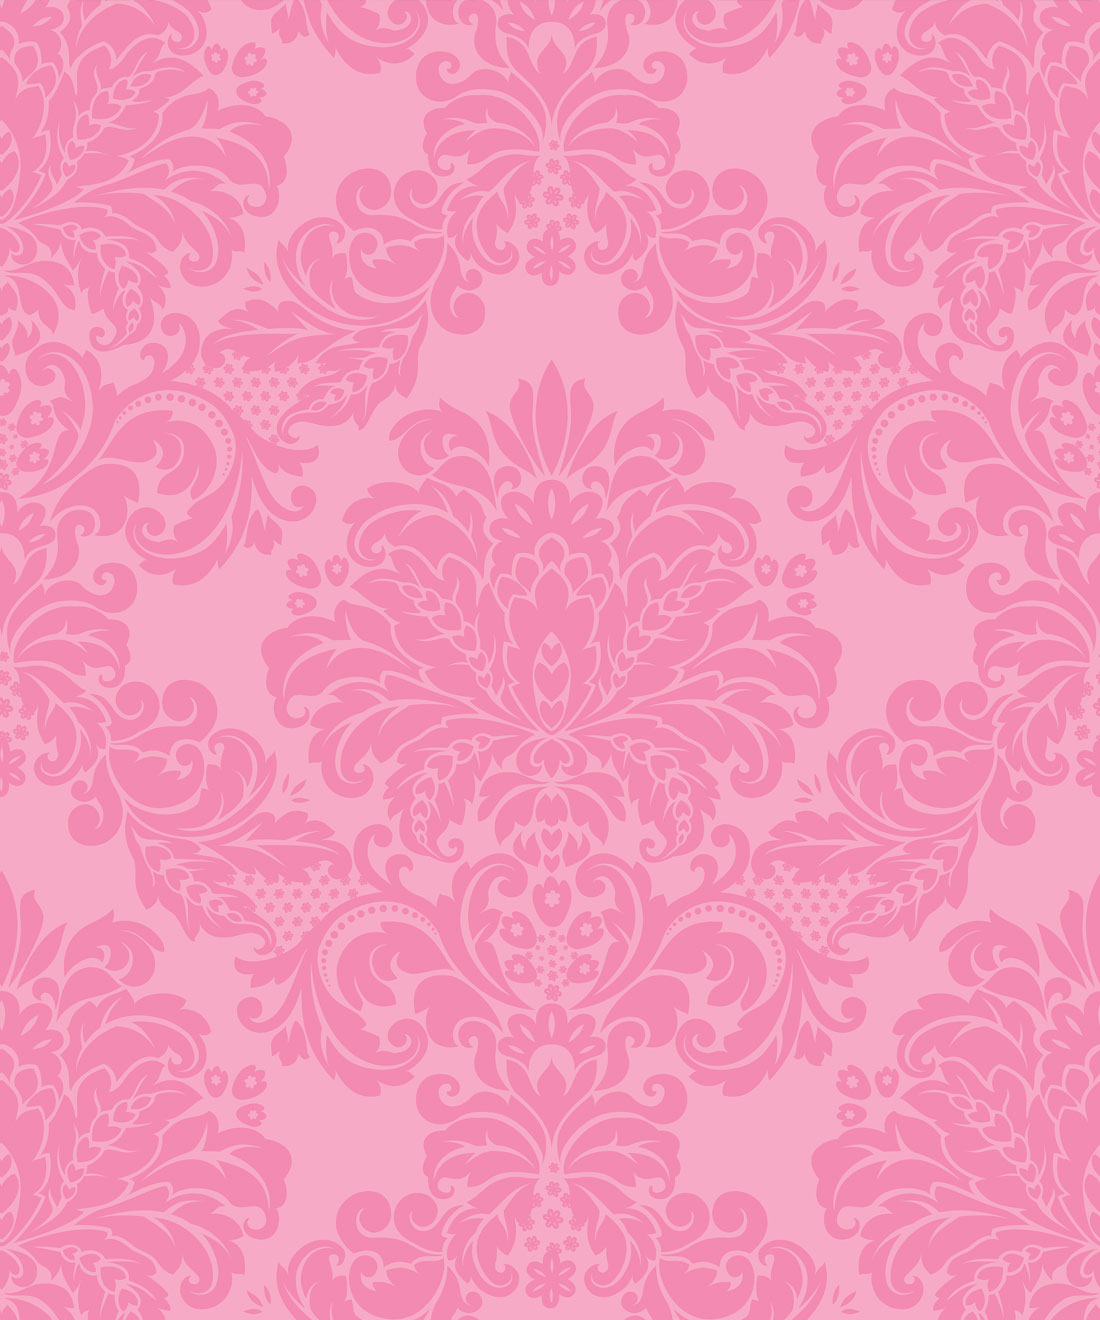 Free Aesthetic Pink Wallpaper Downloads 100 Aesthetic Pink Wallpapers  for FREE  Wallpaperscom